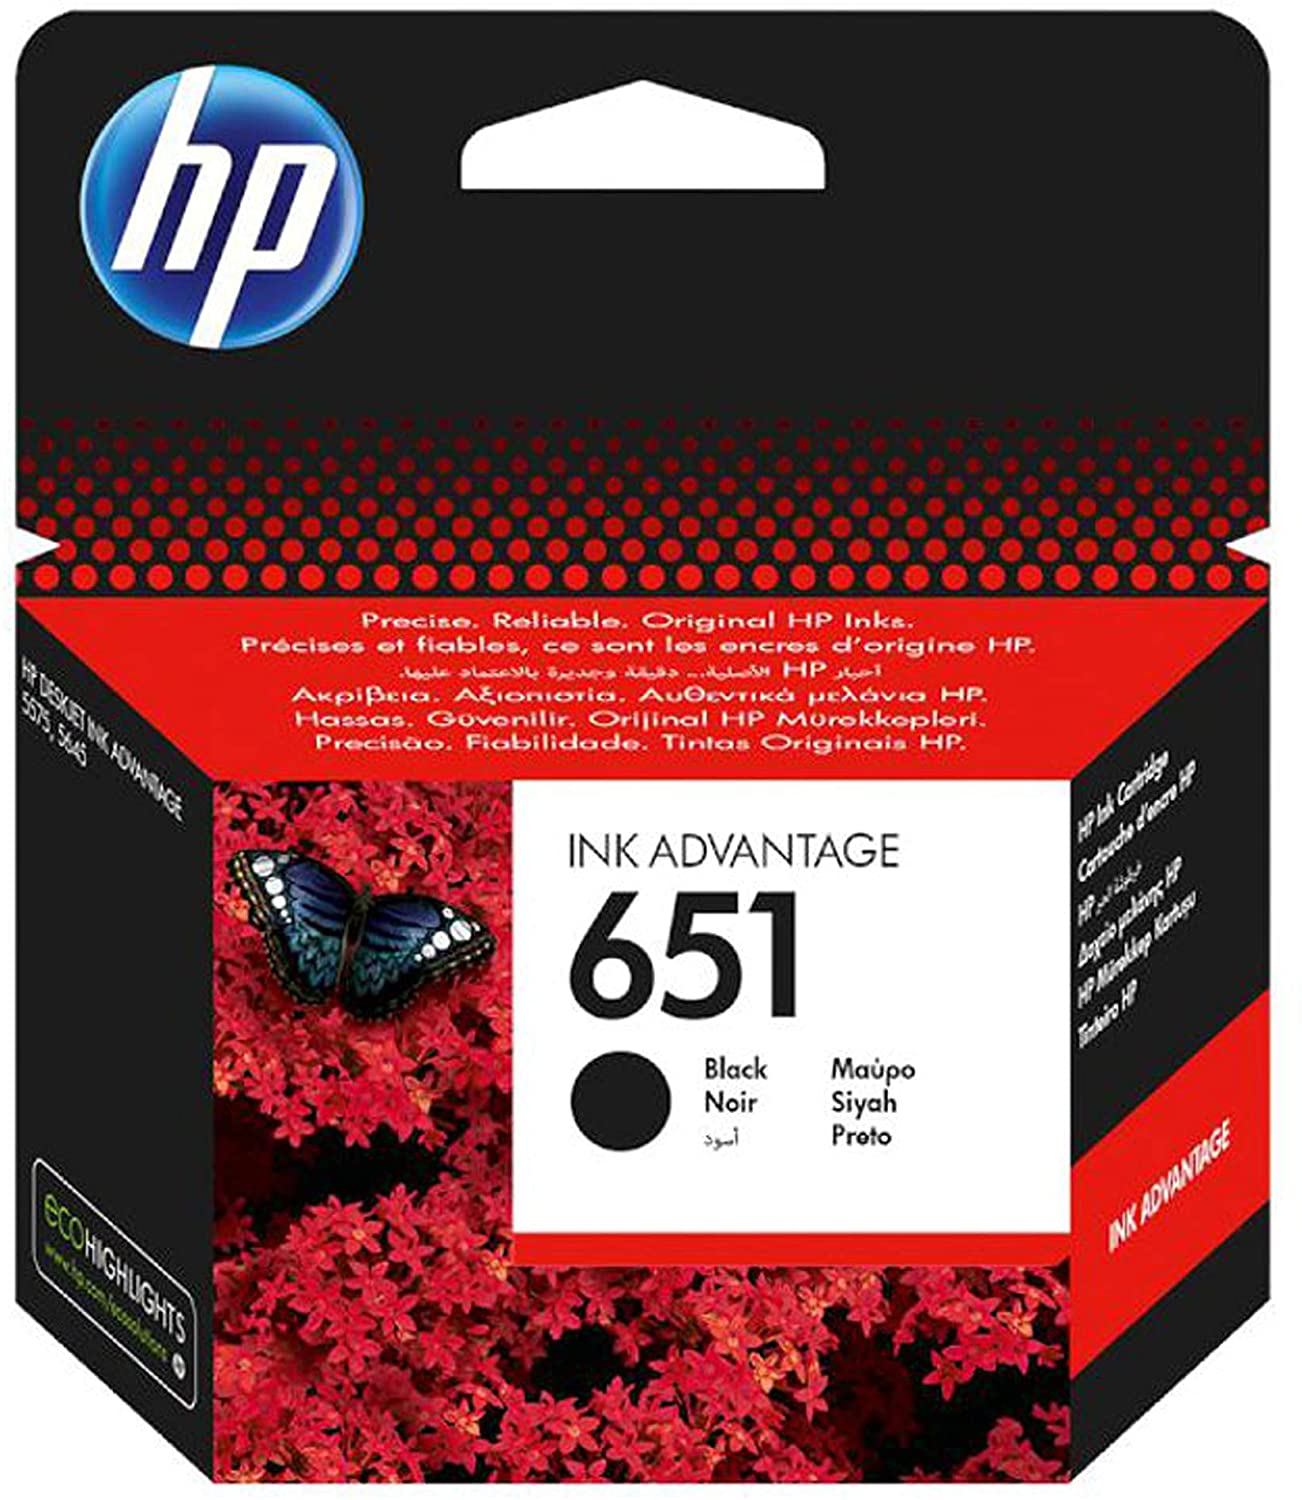 HP 651 Ink Advantage Cartridge, Black - C2P10Ae